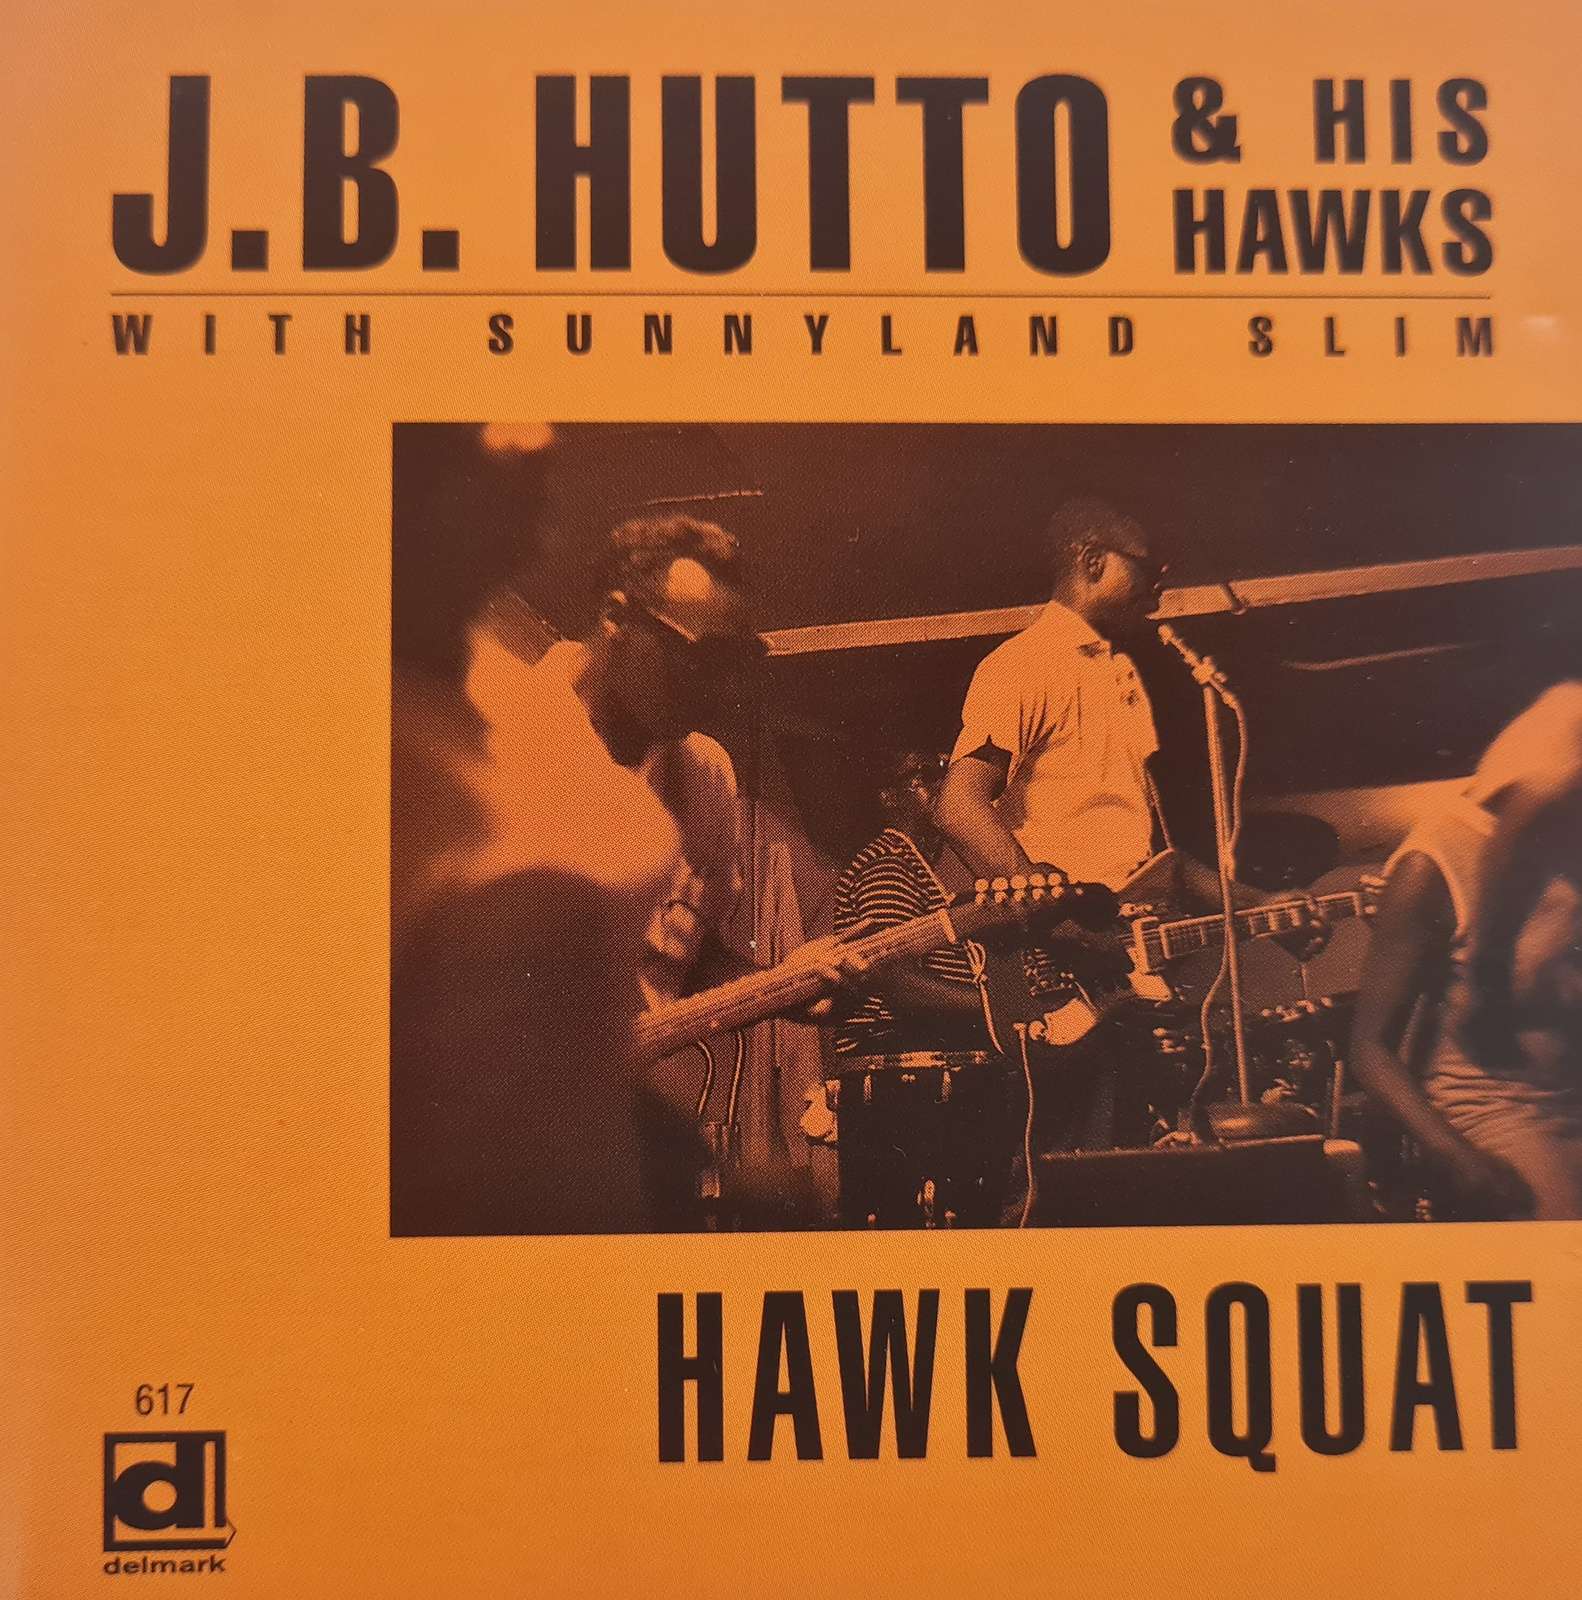 J.B. Hutto & His Hawks with Sunnyland Slim - Hawk Squat (CD)